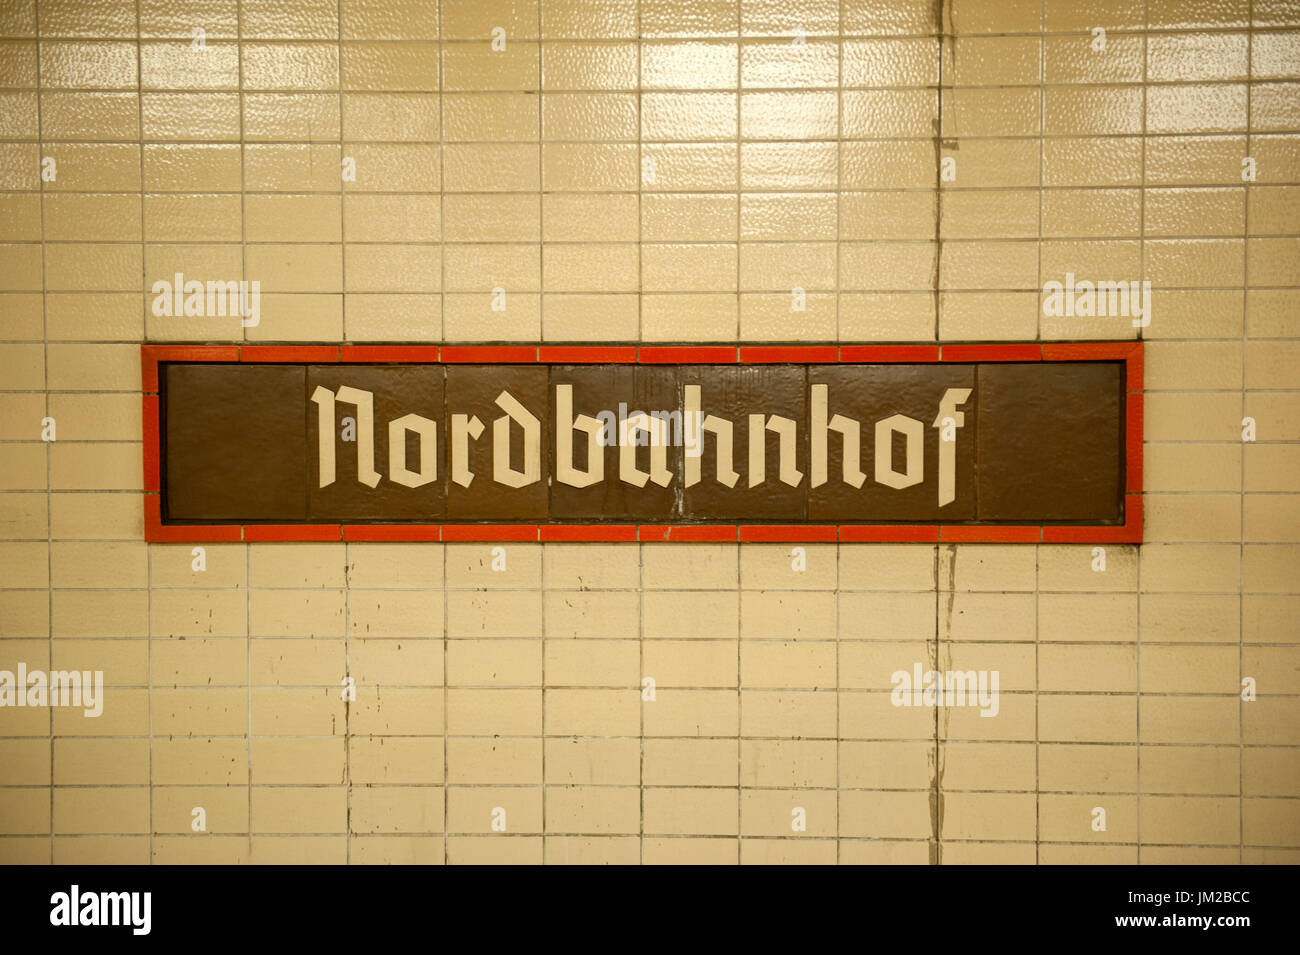 Interior signage for Nordbahnhof S-Bahn station, Berlin, Germany Stock Photo